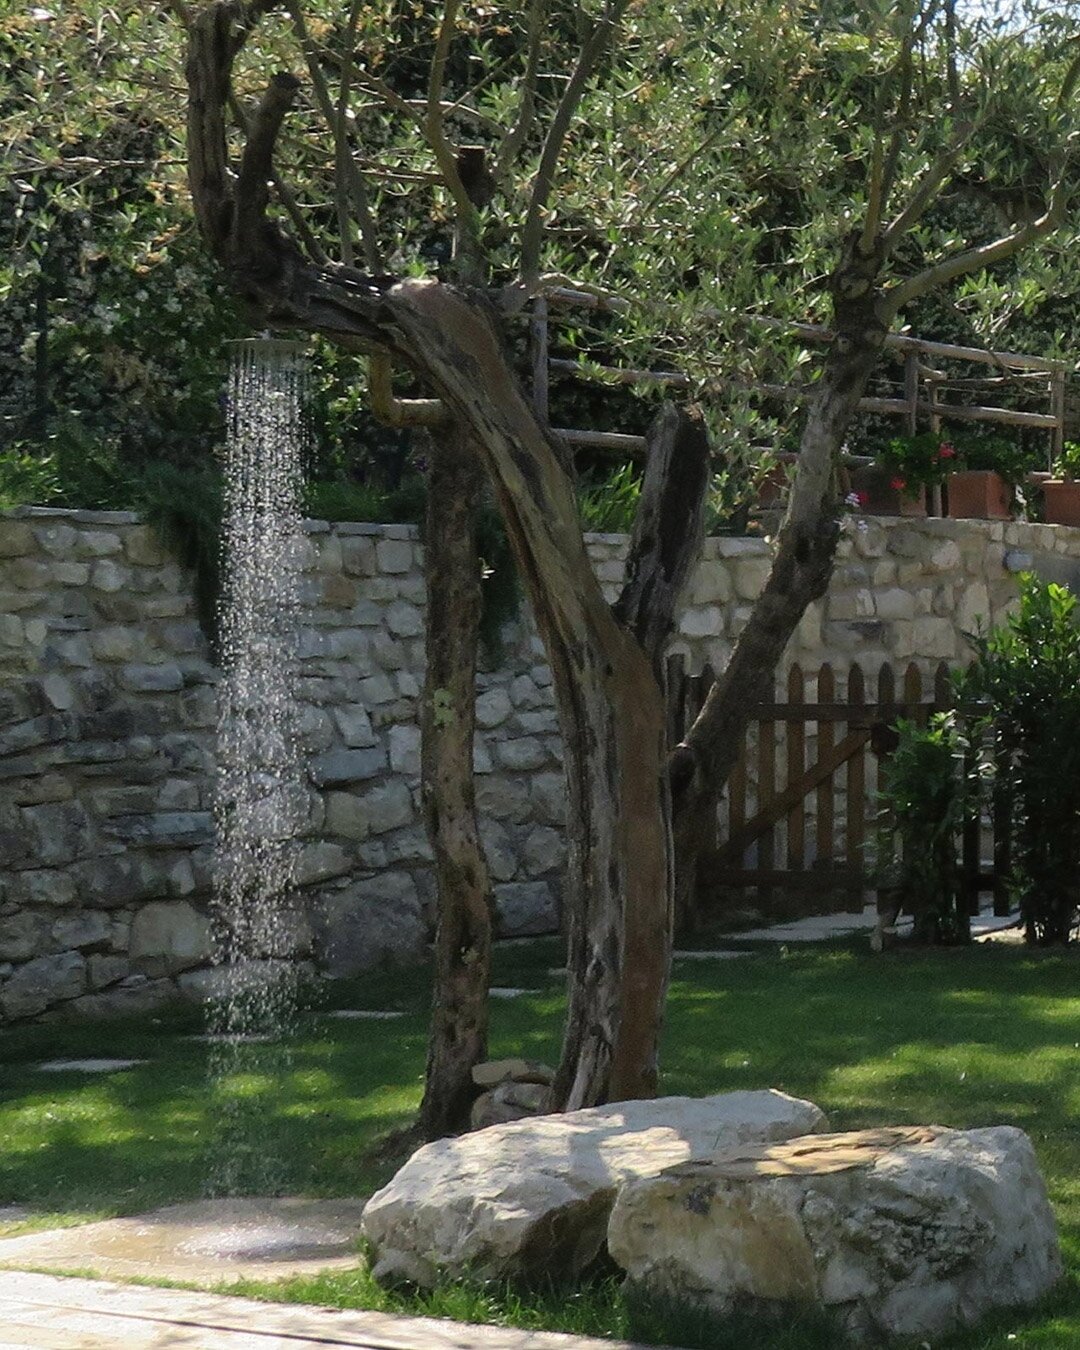 The shower hidden in the olive tree.⁠
⁠
⁠
⁠#italytravel⁠
⁠#tuscany⁠
⁠#florence⁠
#torredisopra⁠